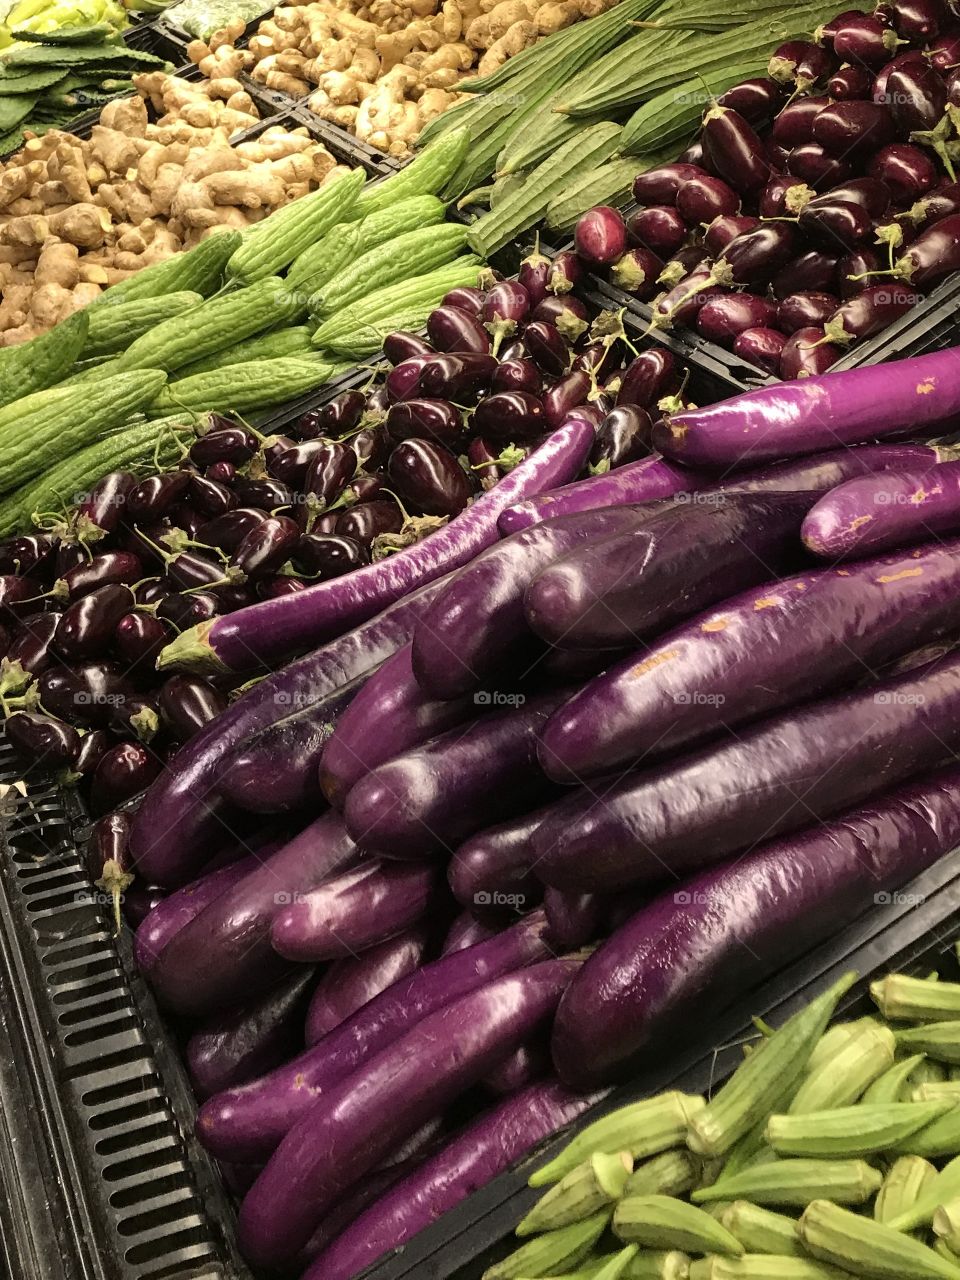 Colors of health. Purple eggplants.